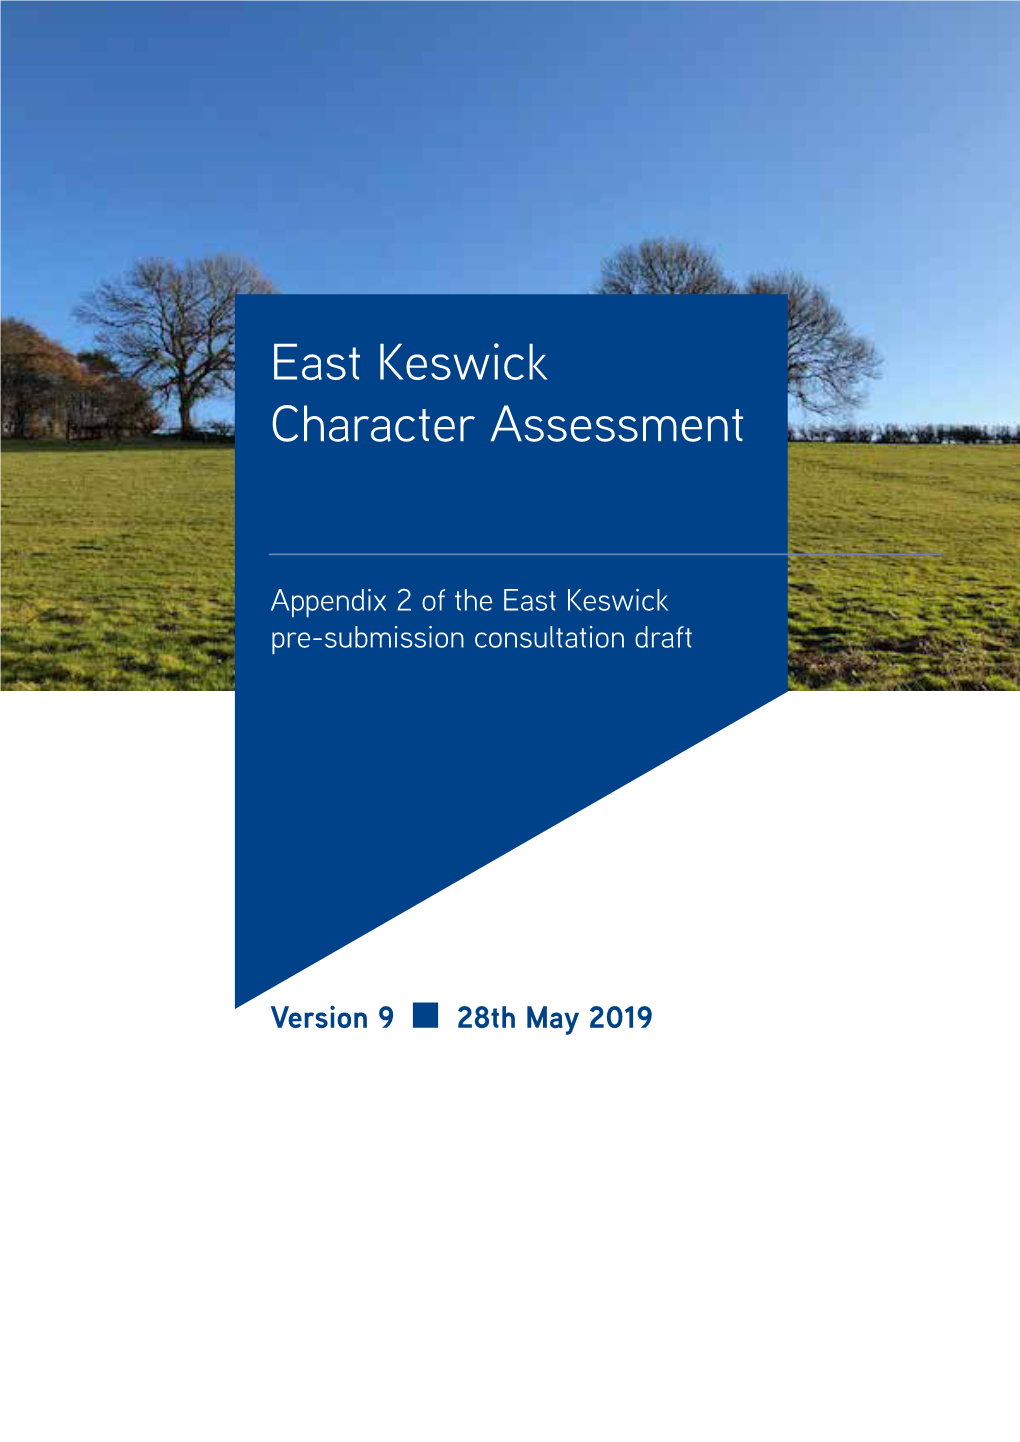 East Keswick Character Assessment